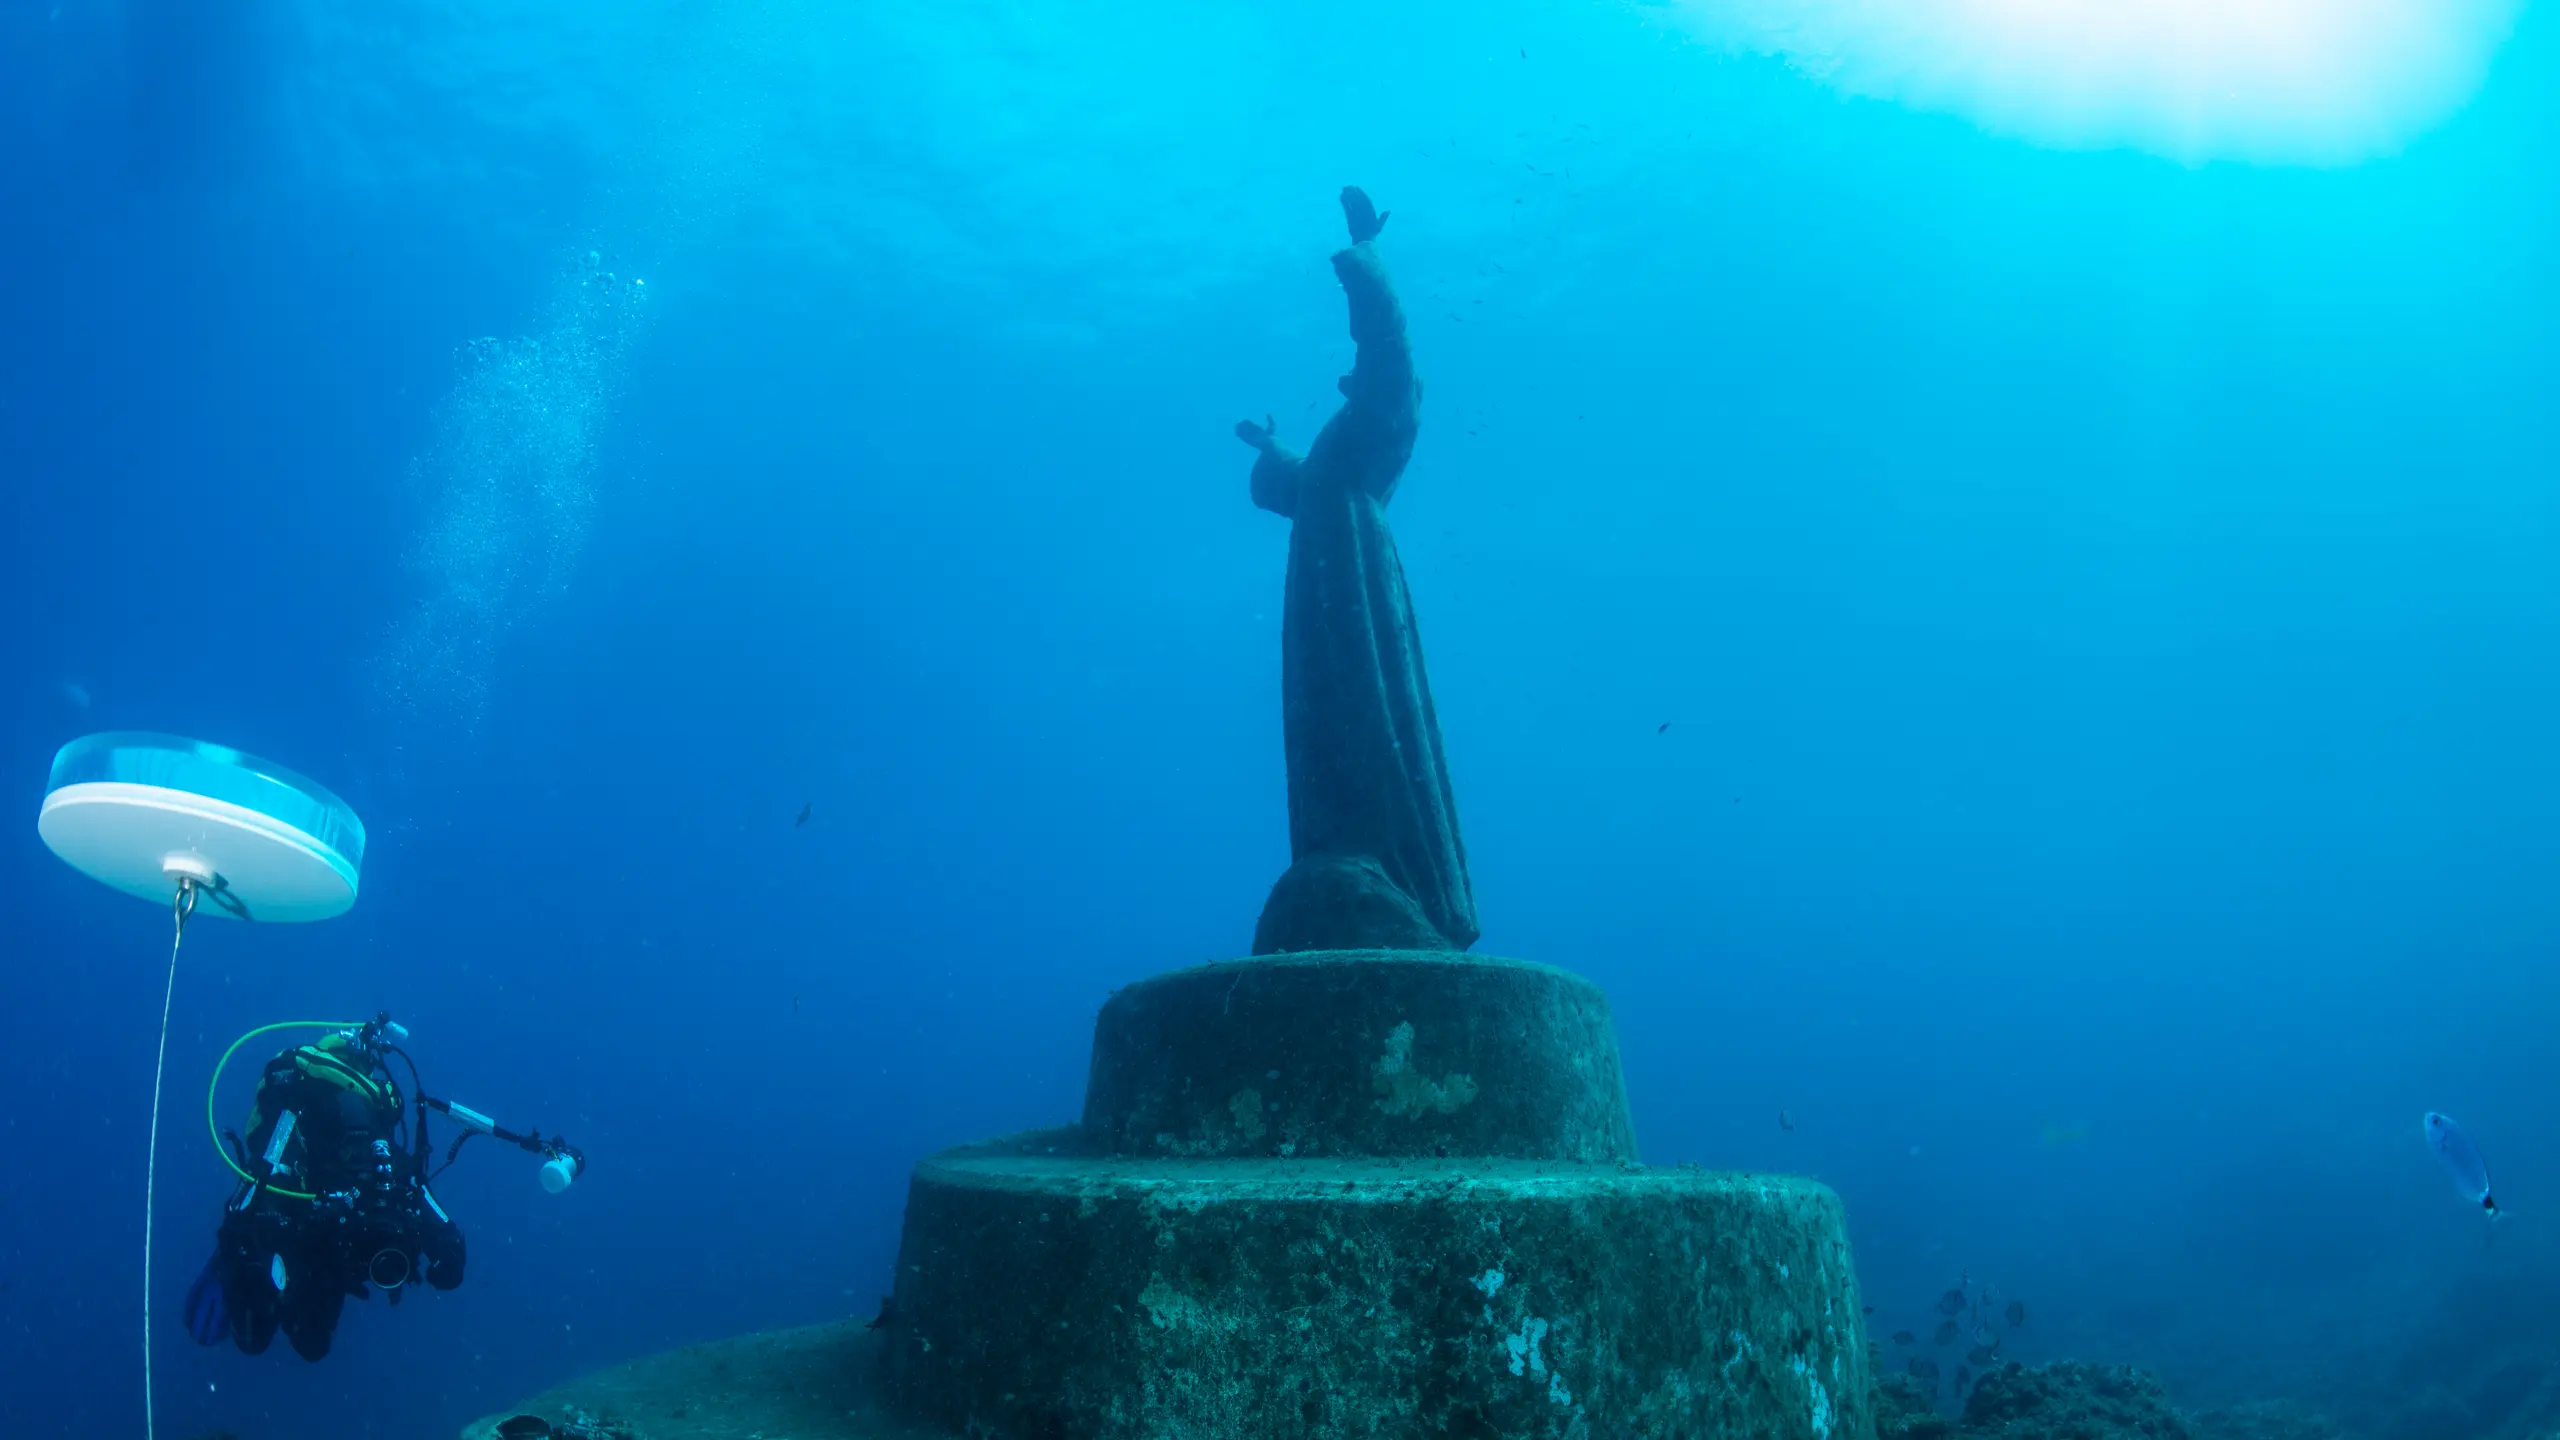 underwater photo of a statue of Jesus Christ